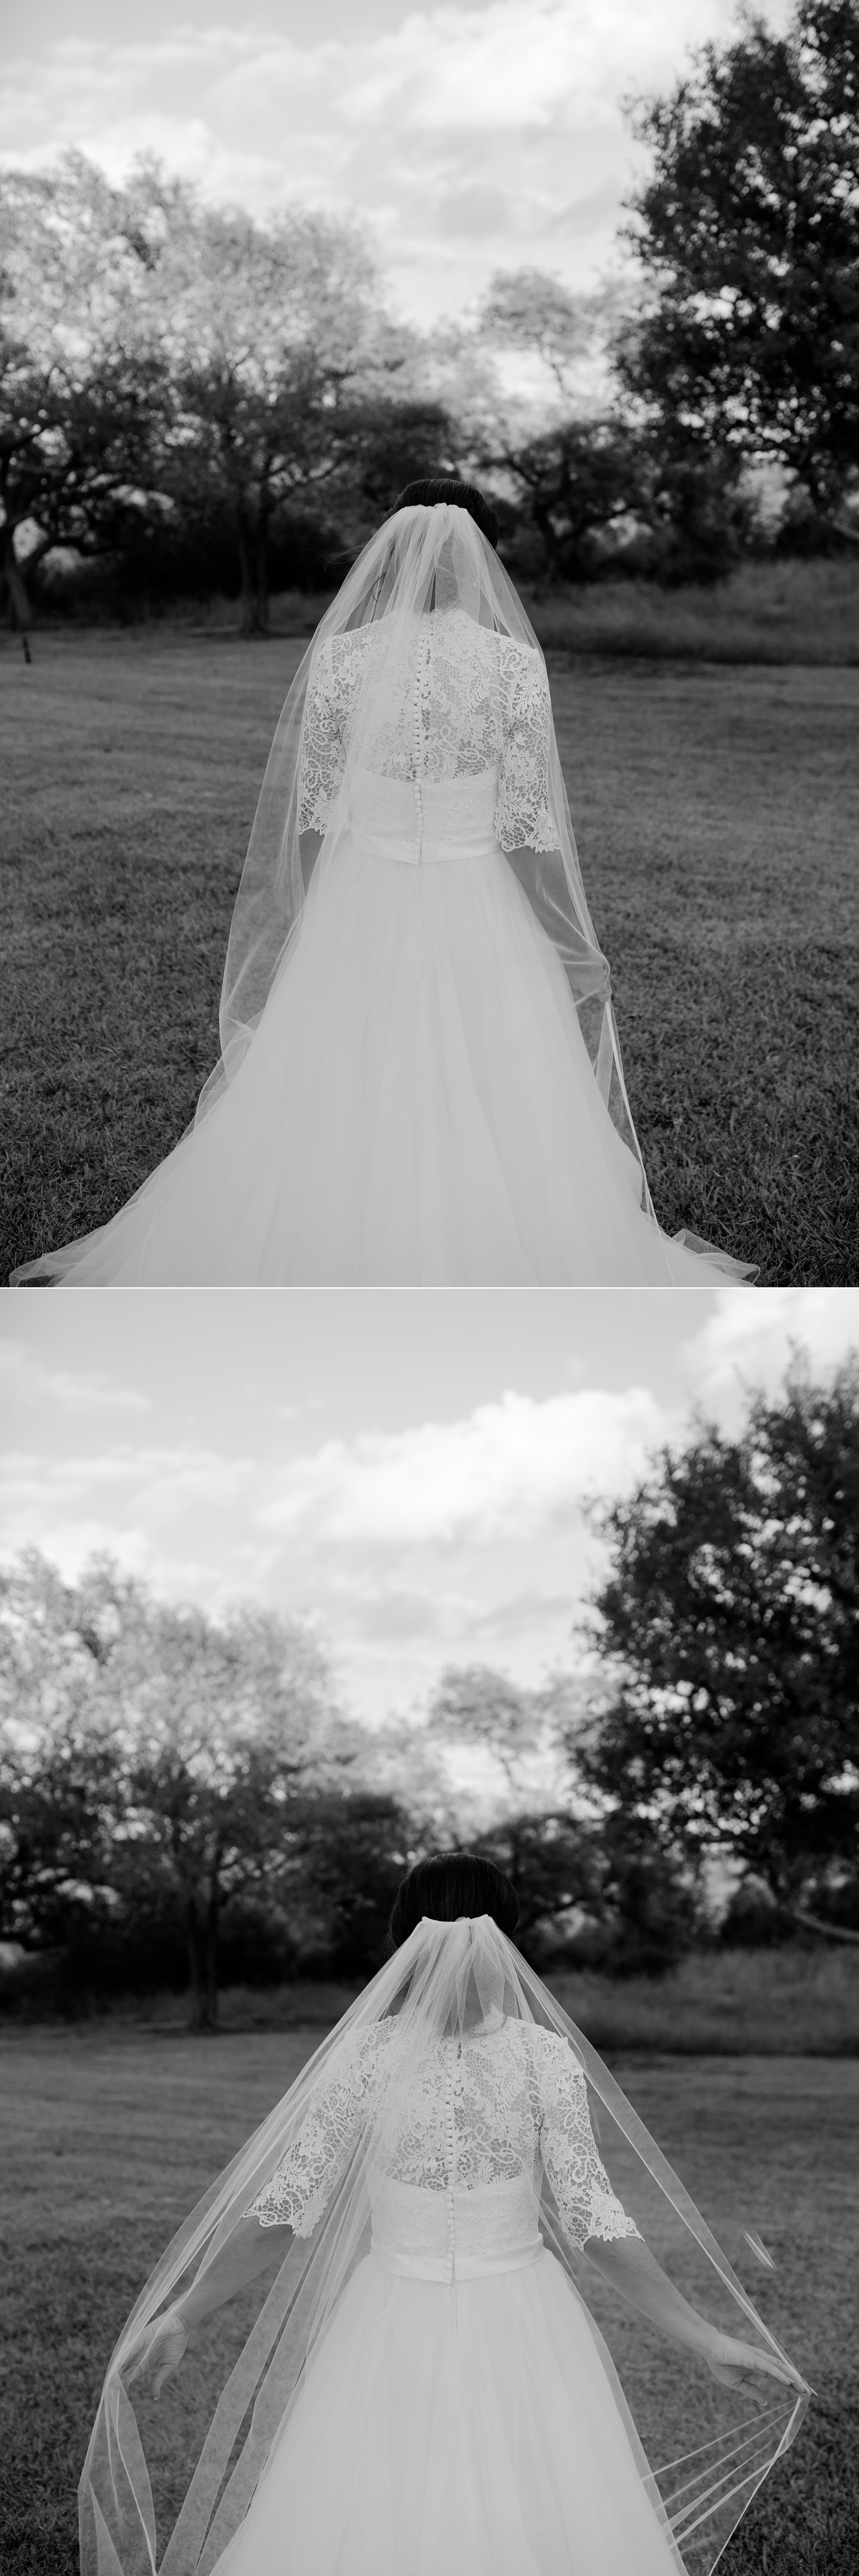 austin-minneapolis-wedding-engagement-elopement-bridals-prices-best-senior-photographer-destination-elopement-milestone-texas-dallas-houston-lexi_0033.jpg